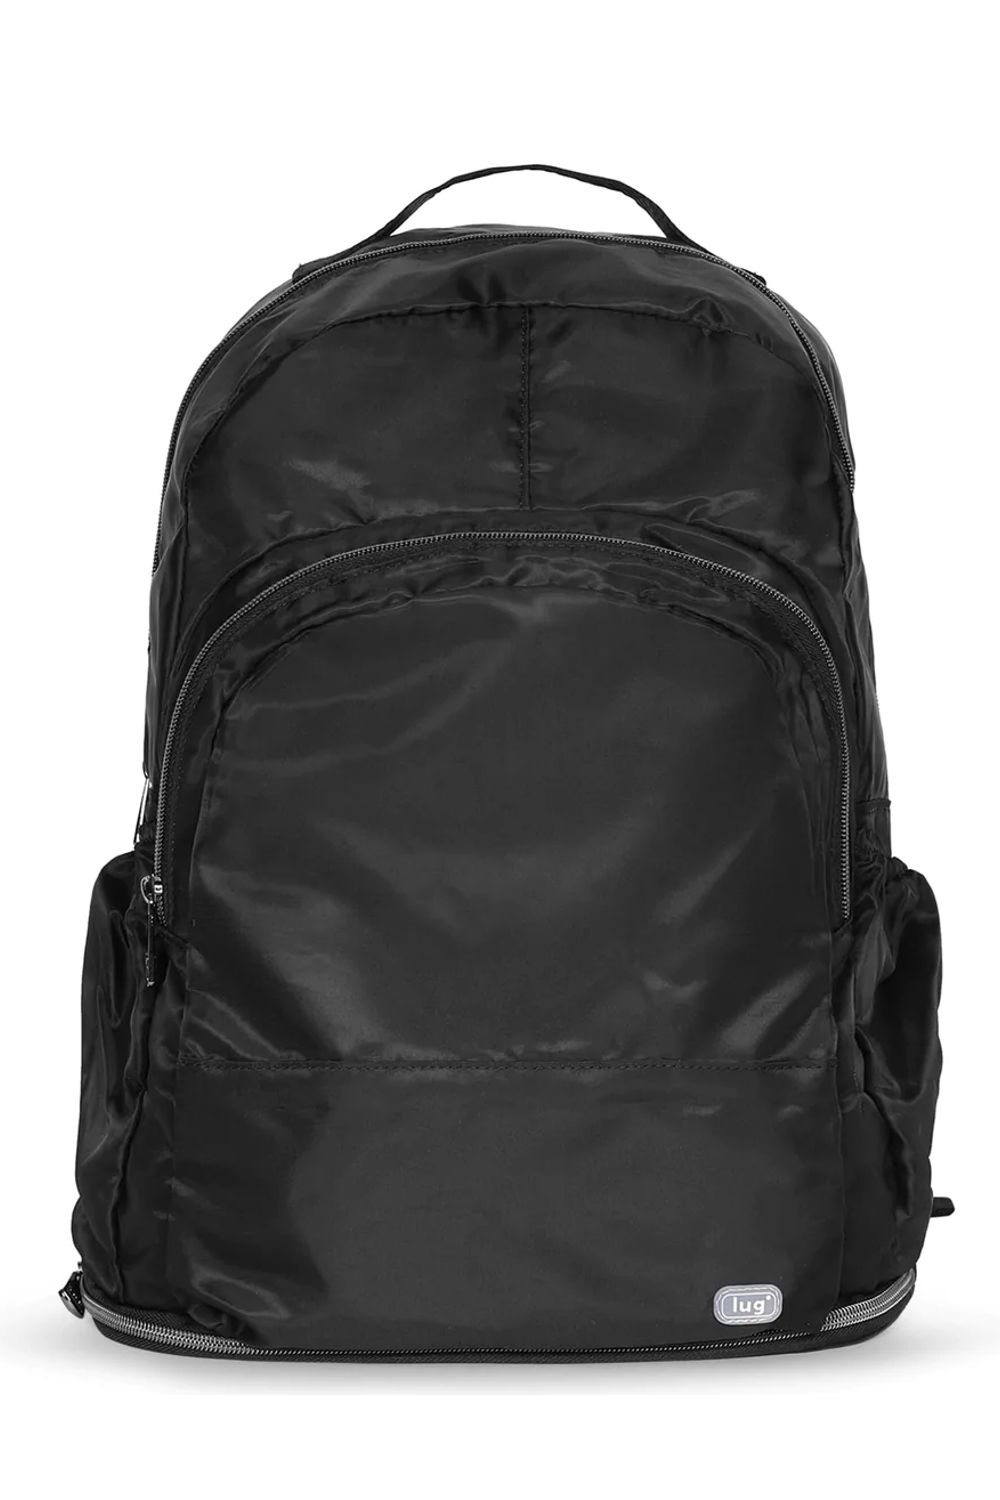 Echo SE 2 Packable Backpack 